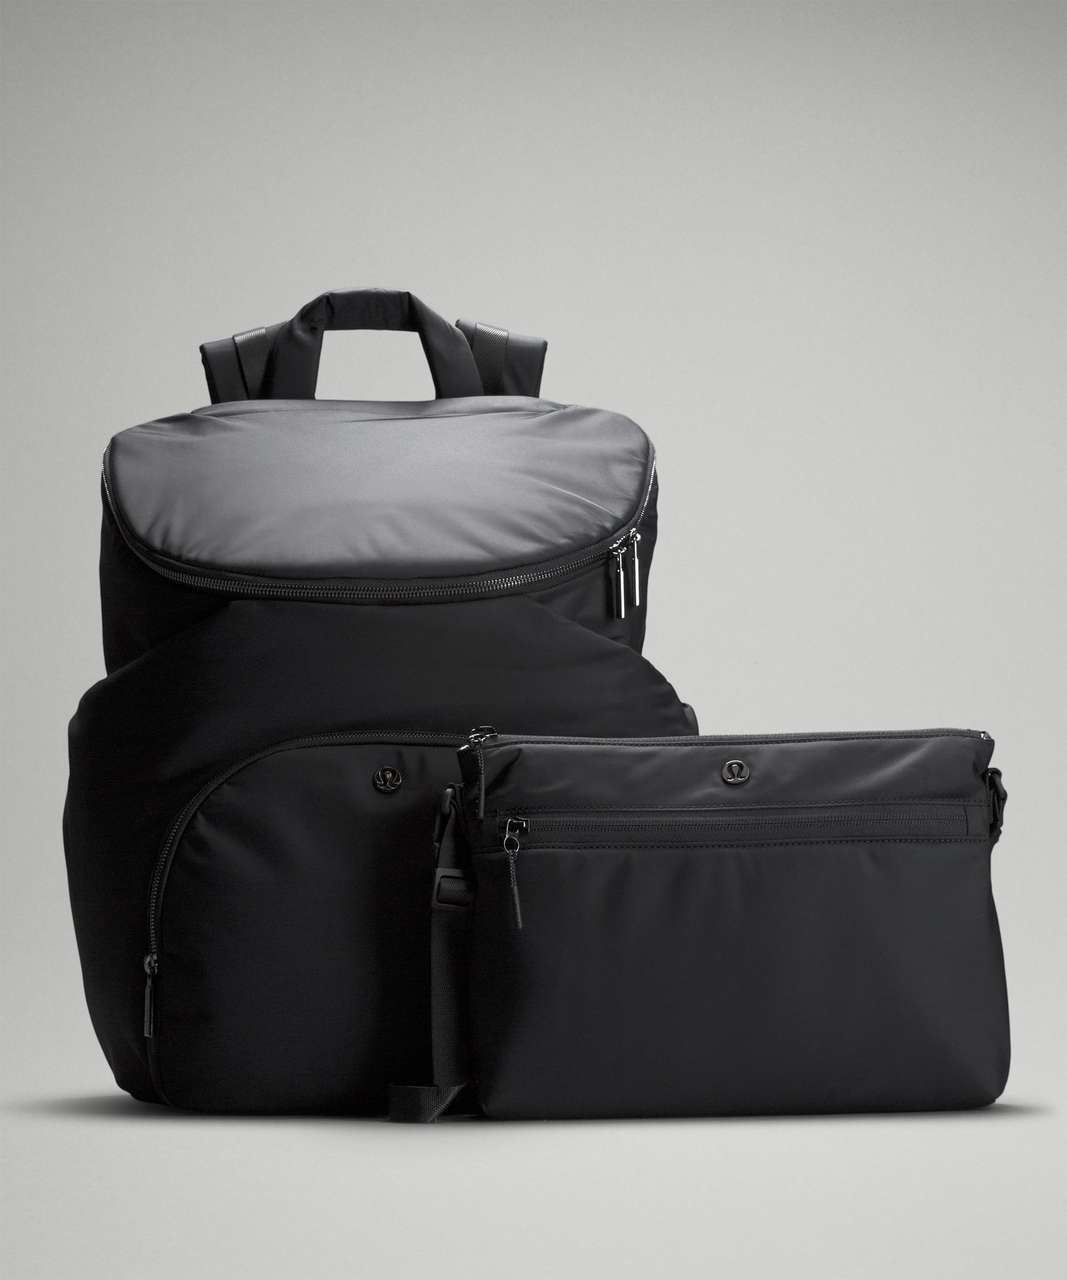 Lululemon New Parent Backpack 17L - Black / Trench